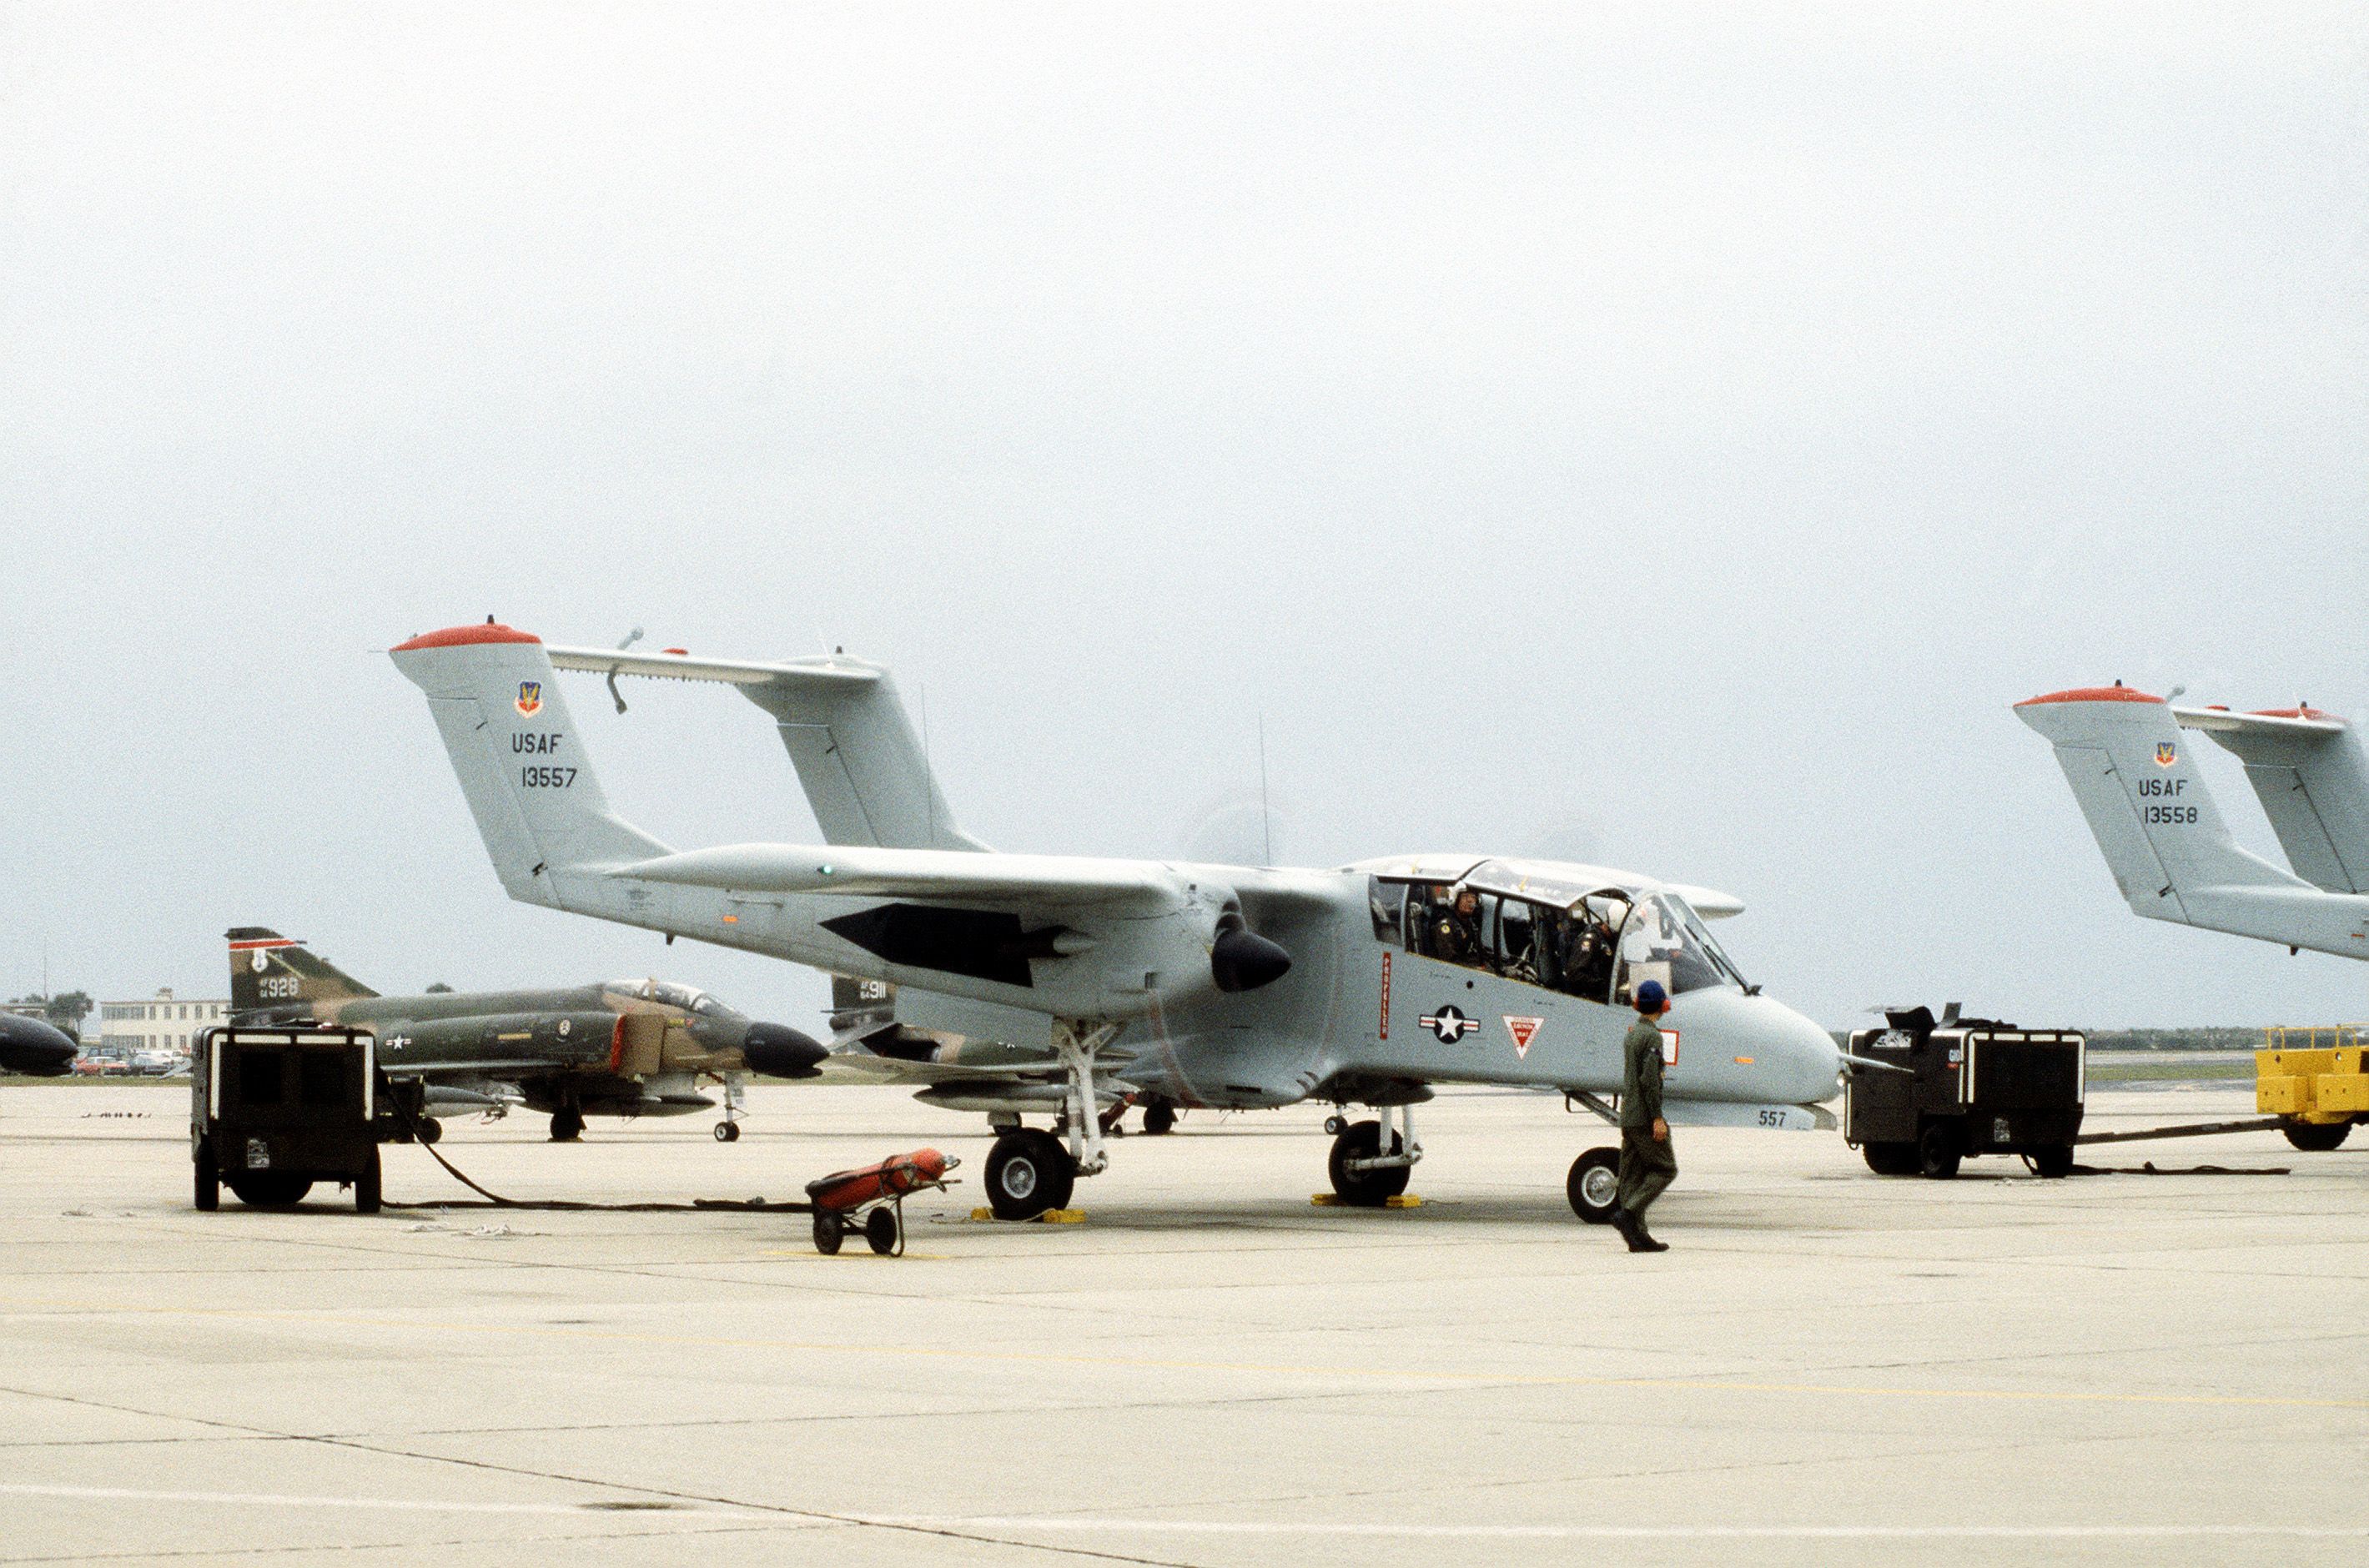 An OV-10A parked at Patrick Air Force Base.